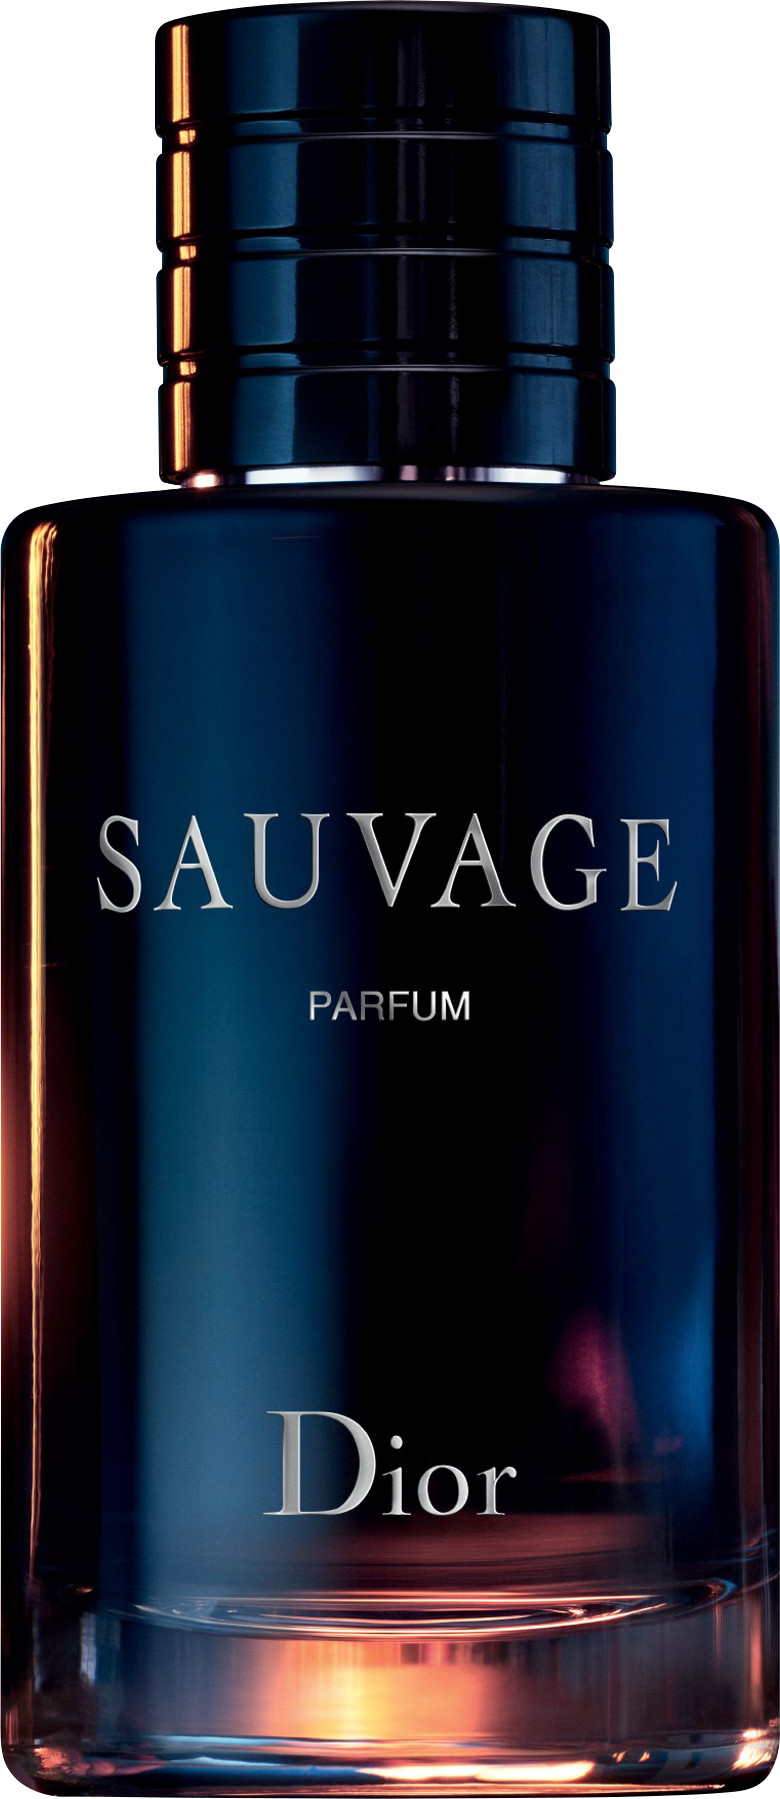 Dior Sauvage Parfum parfém pro muže 100 ml tester